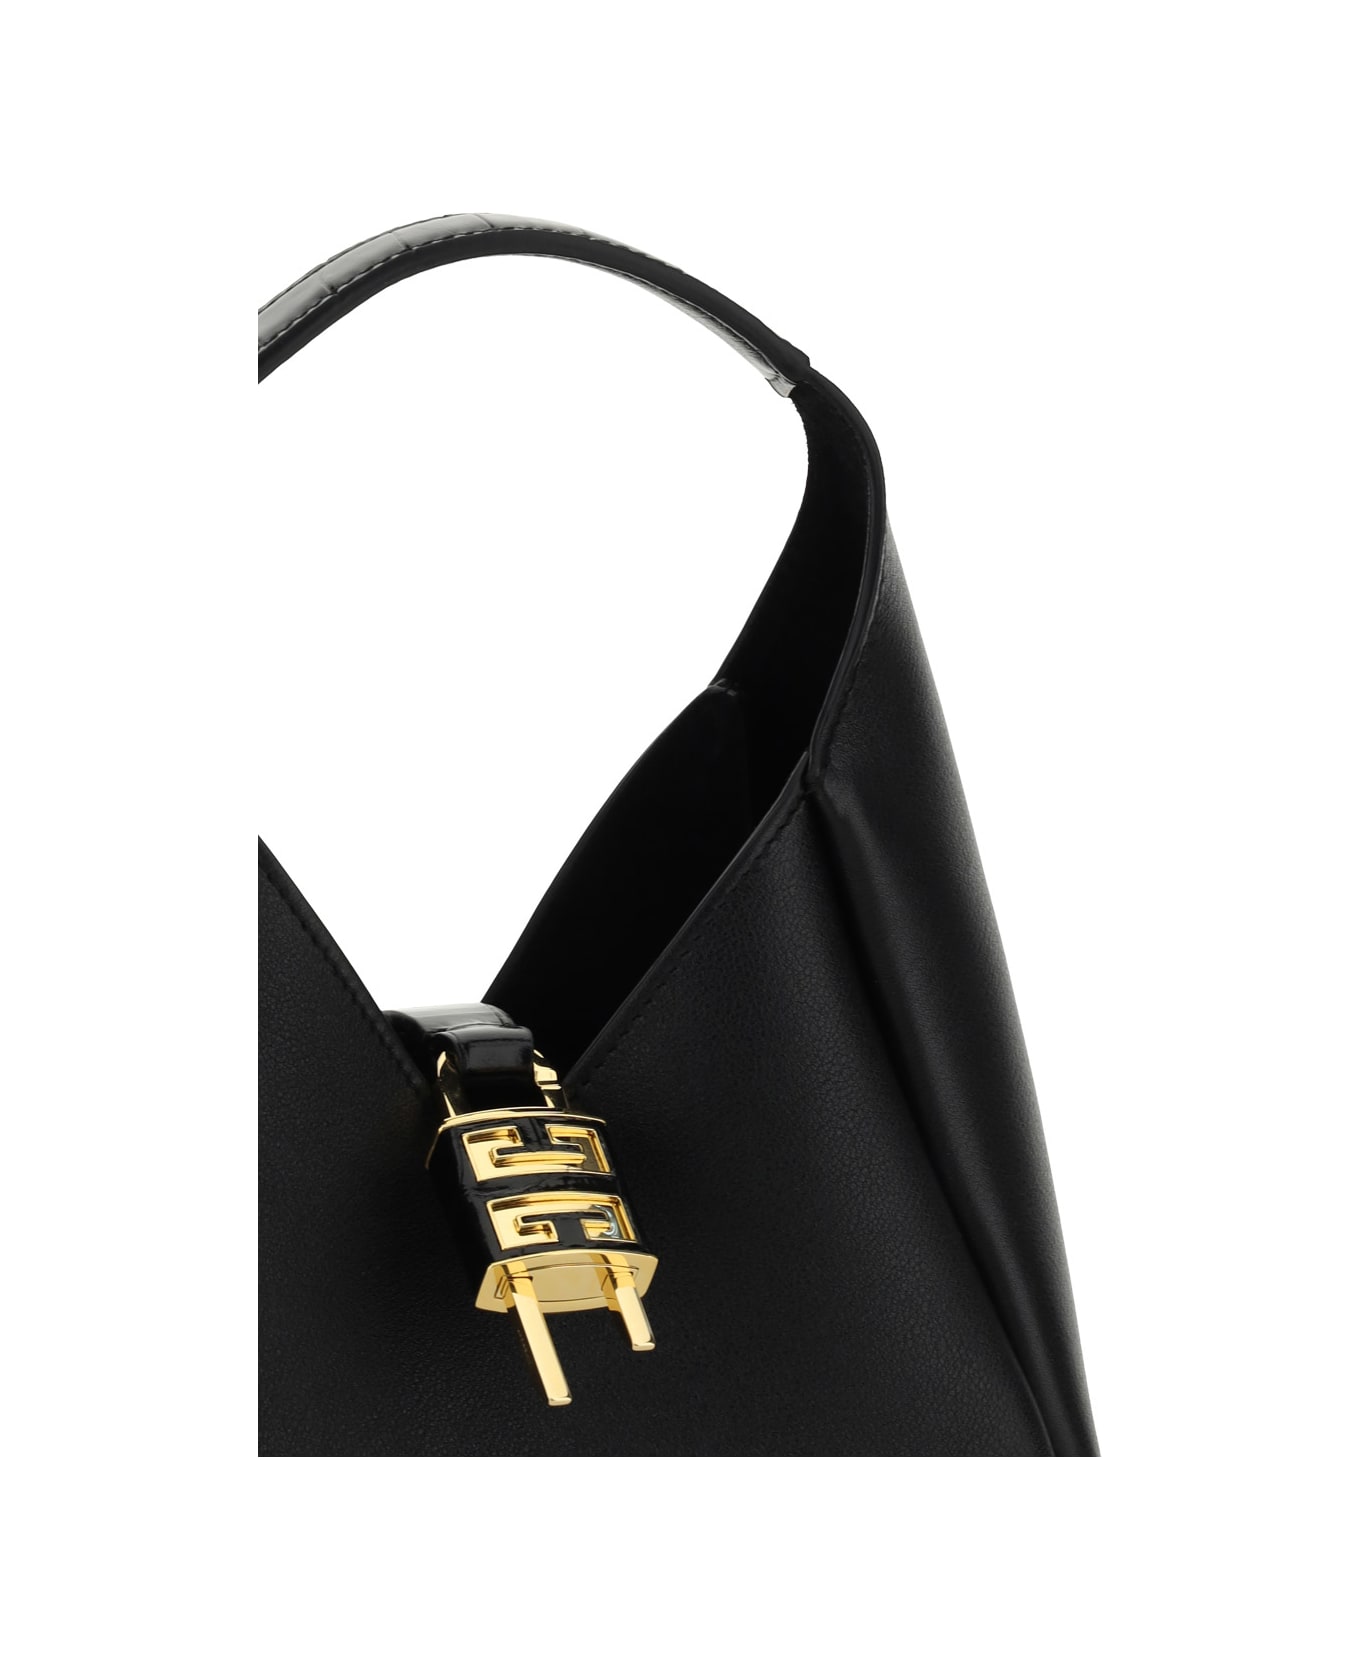 Givenchy G-hobo Leather Mini Handbag - Black トートバッグ